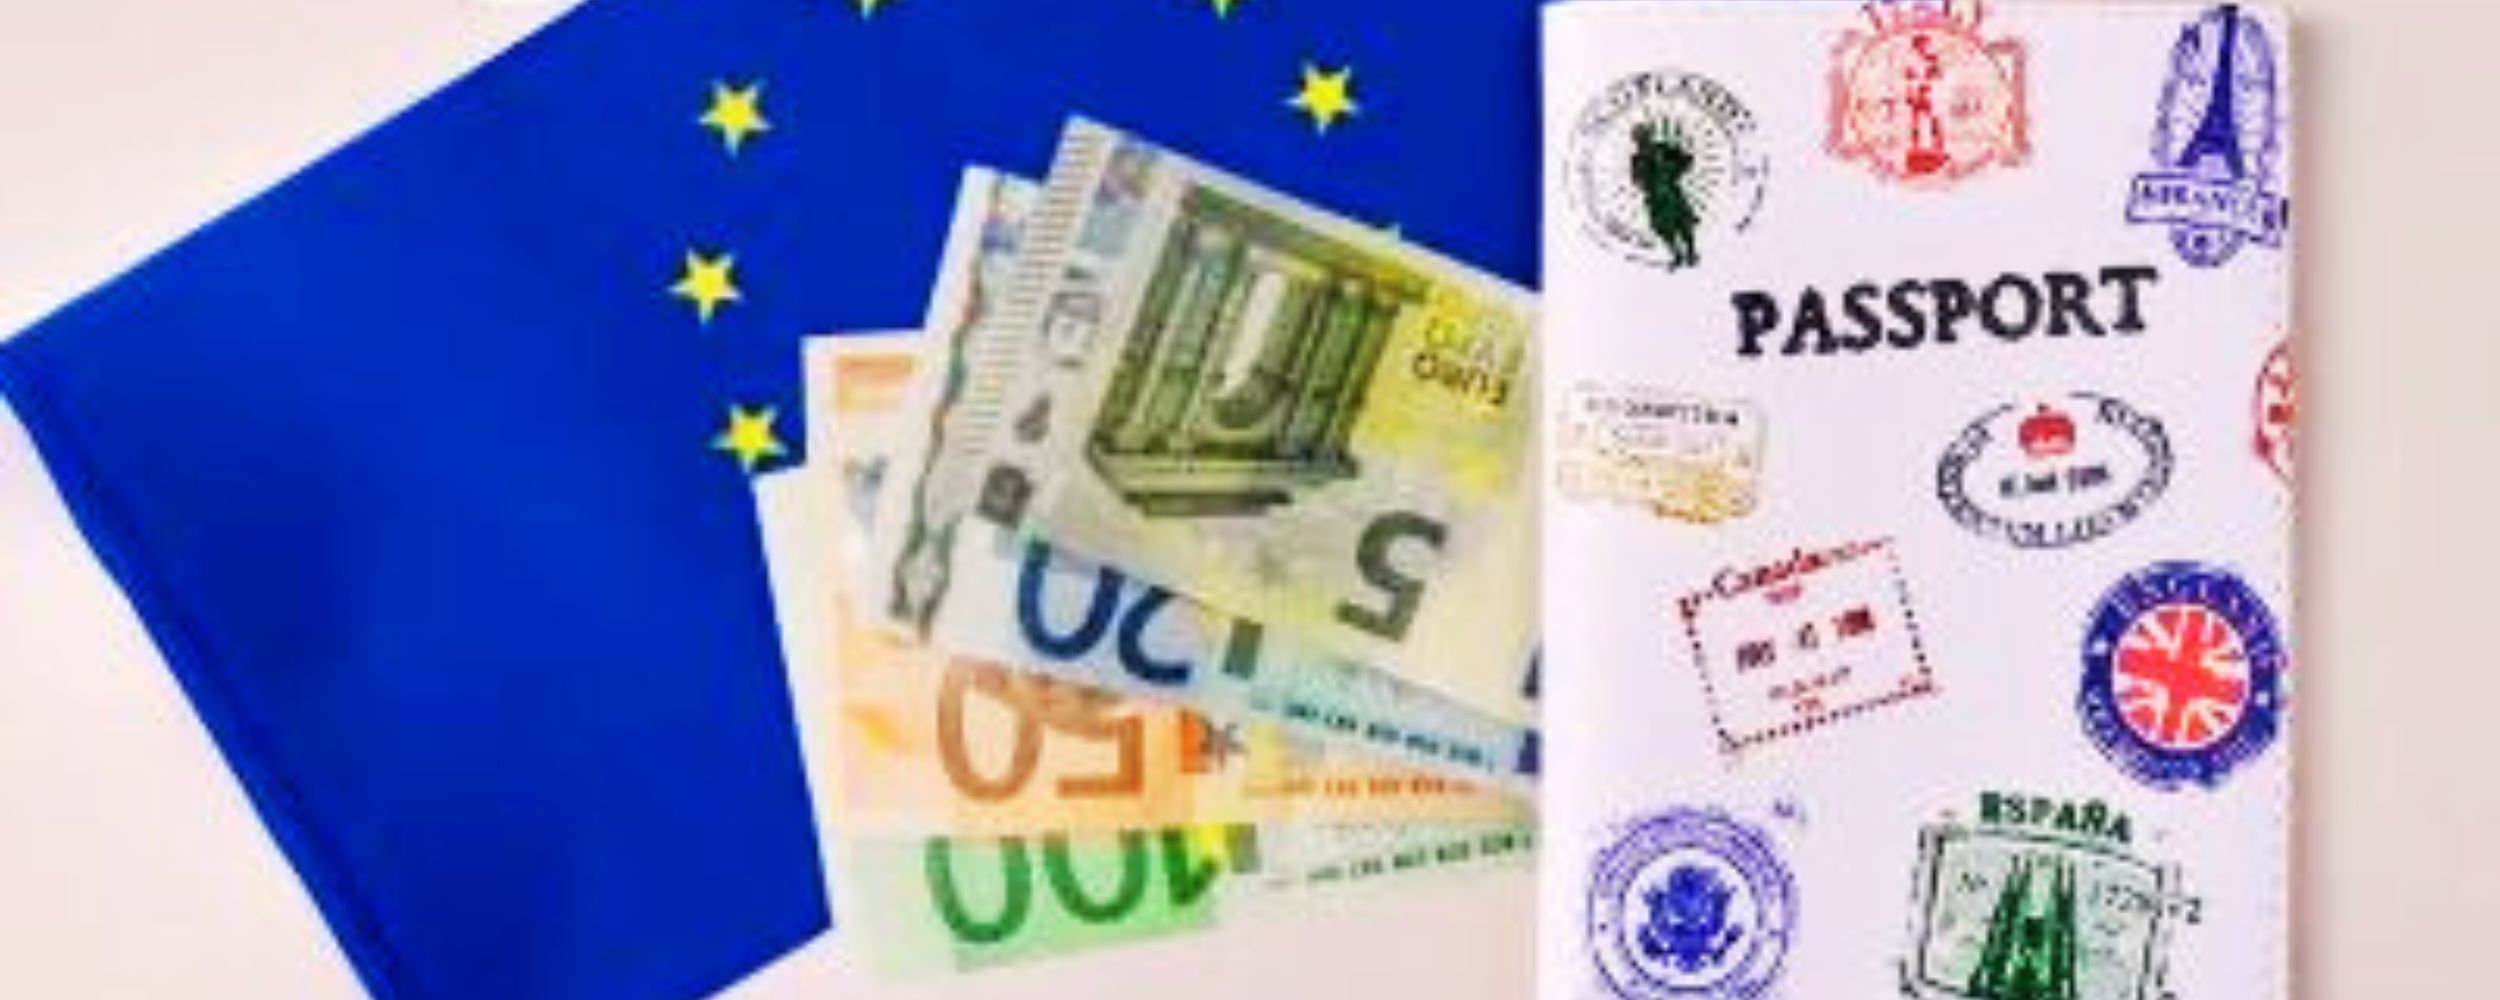 New Fast-track Saudi e-Visa Introduced for UK US and Schengen Visa Holders